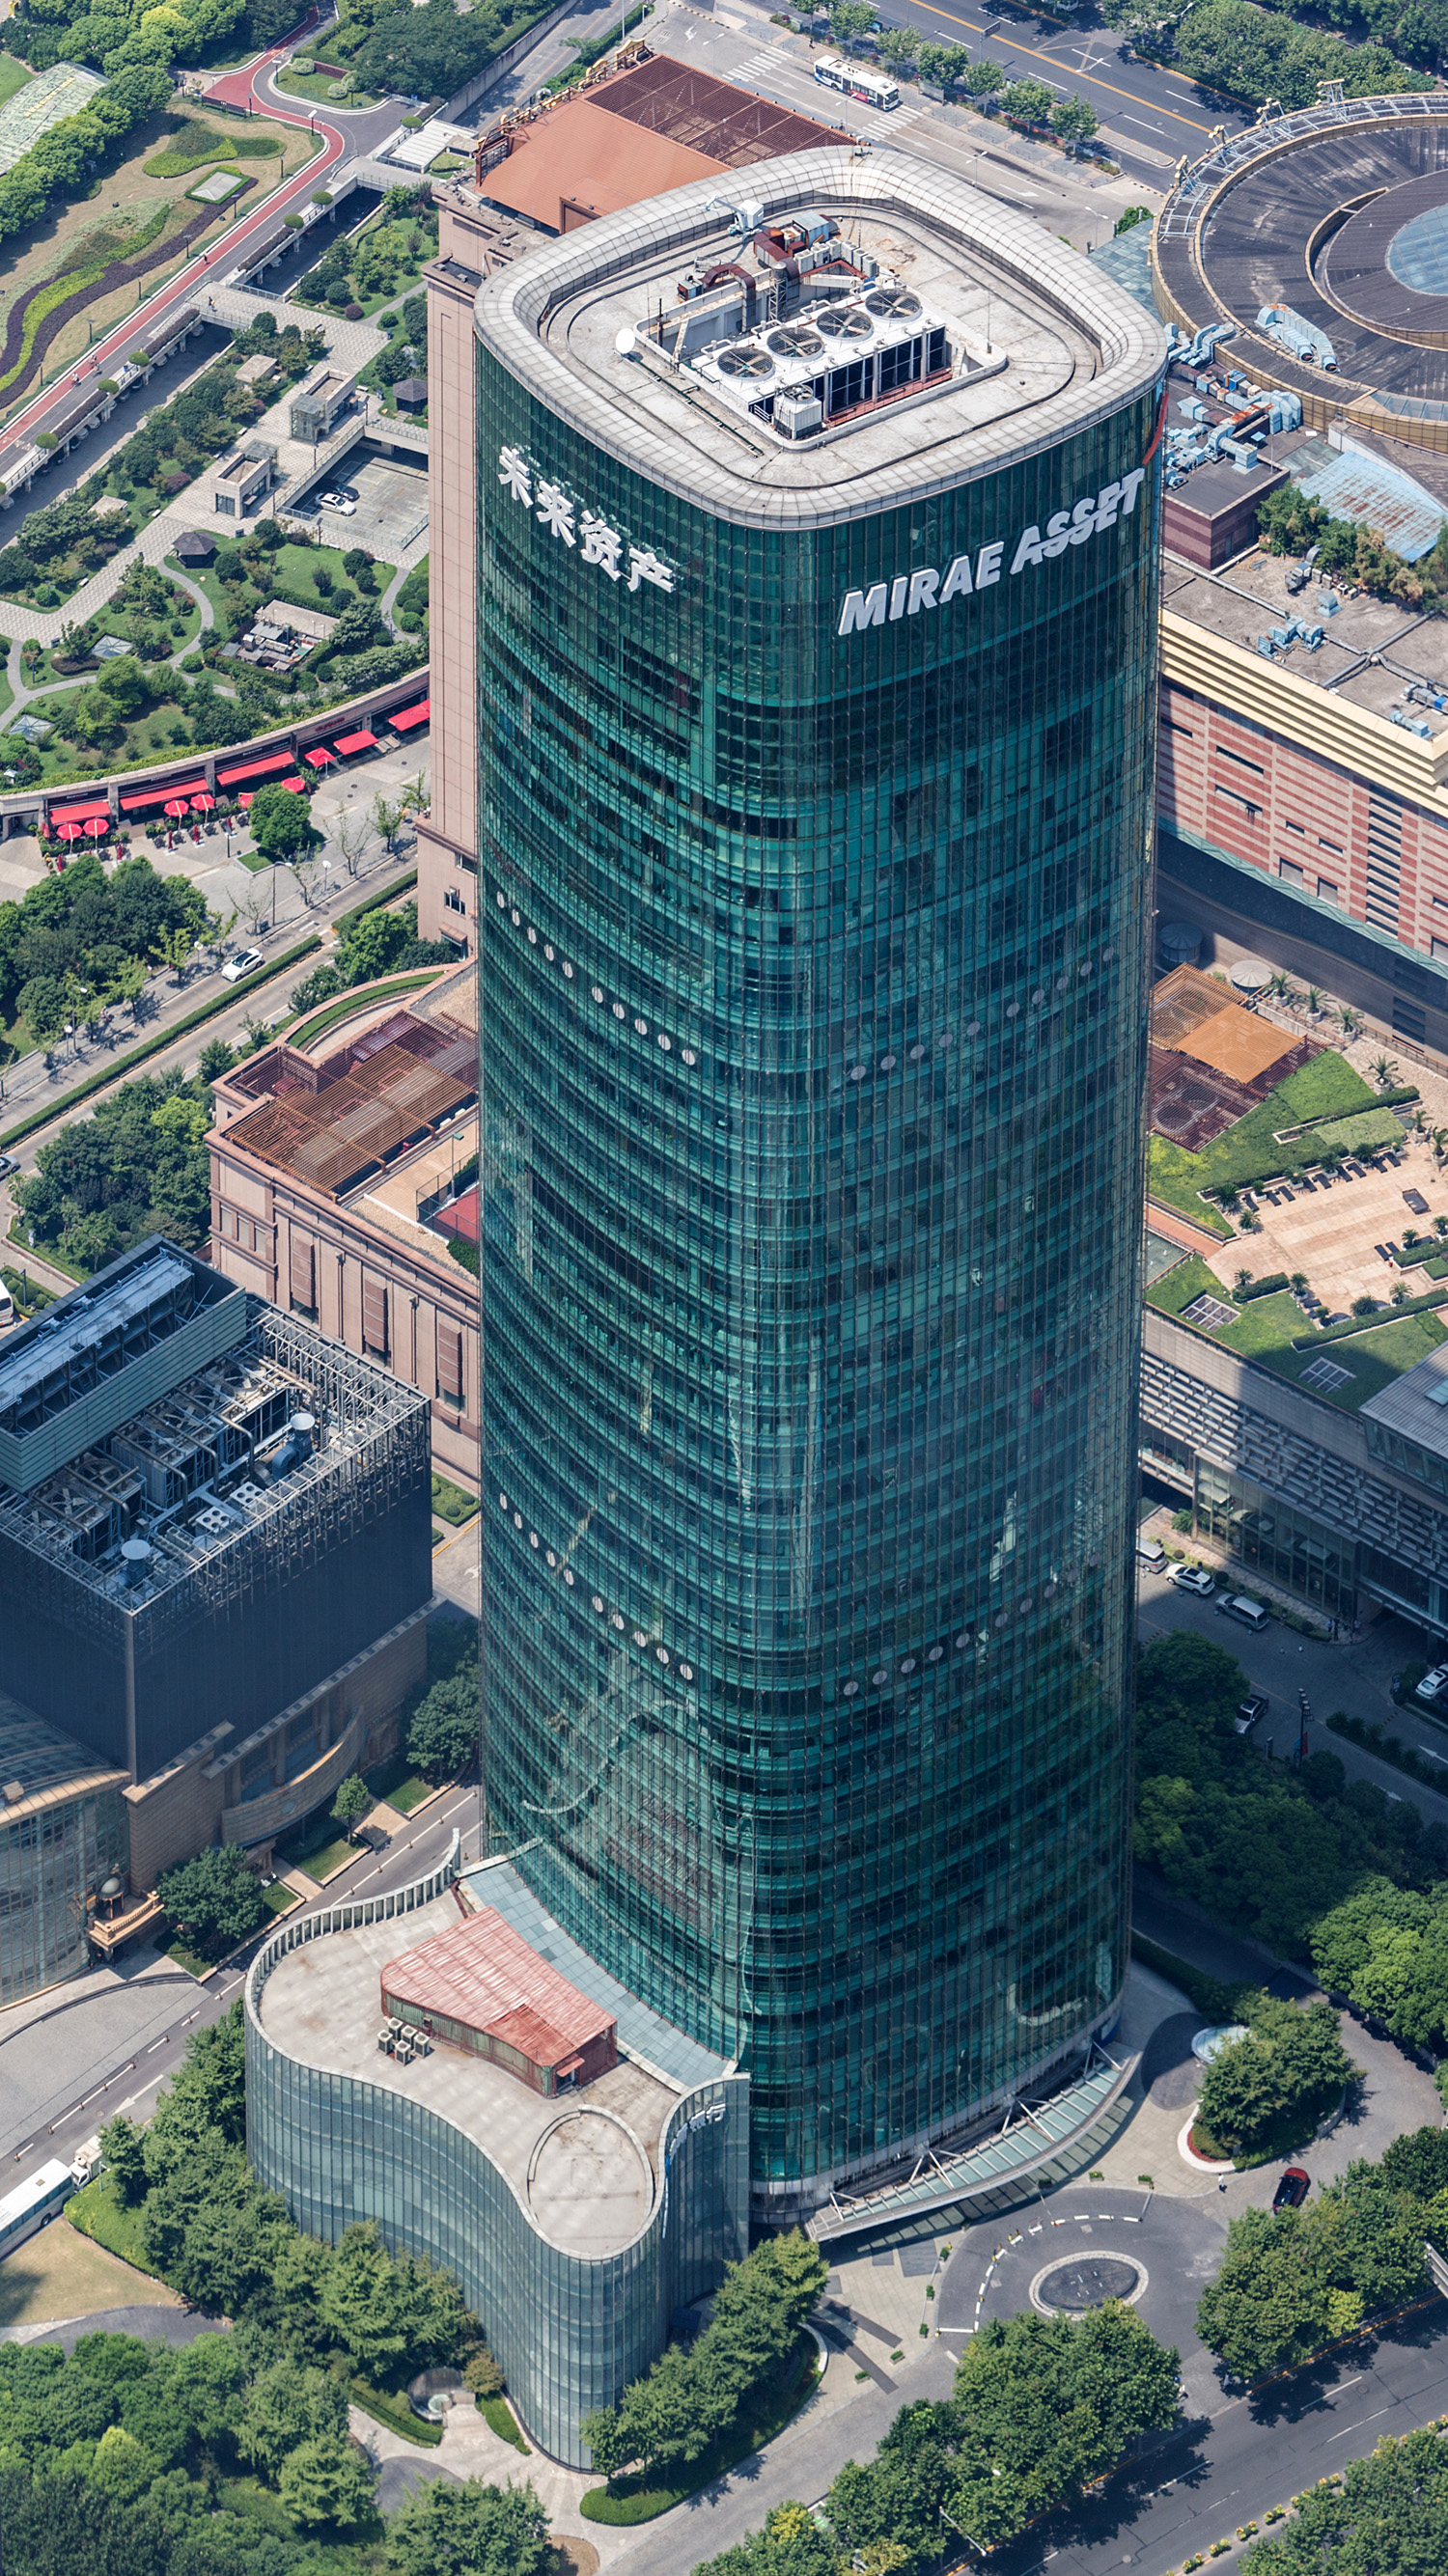 Mirae Asset Tower, Shanghai - View from Shanghai Tower. © Mathias Beinling